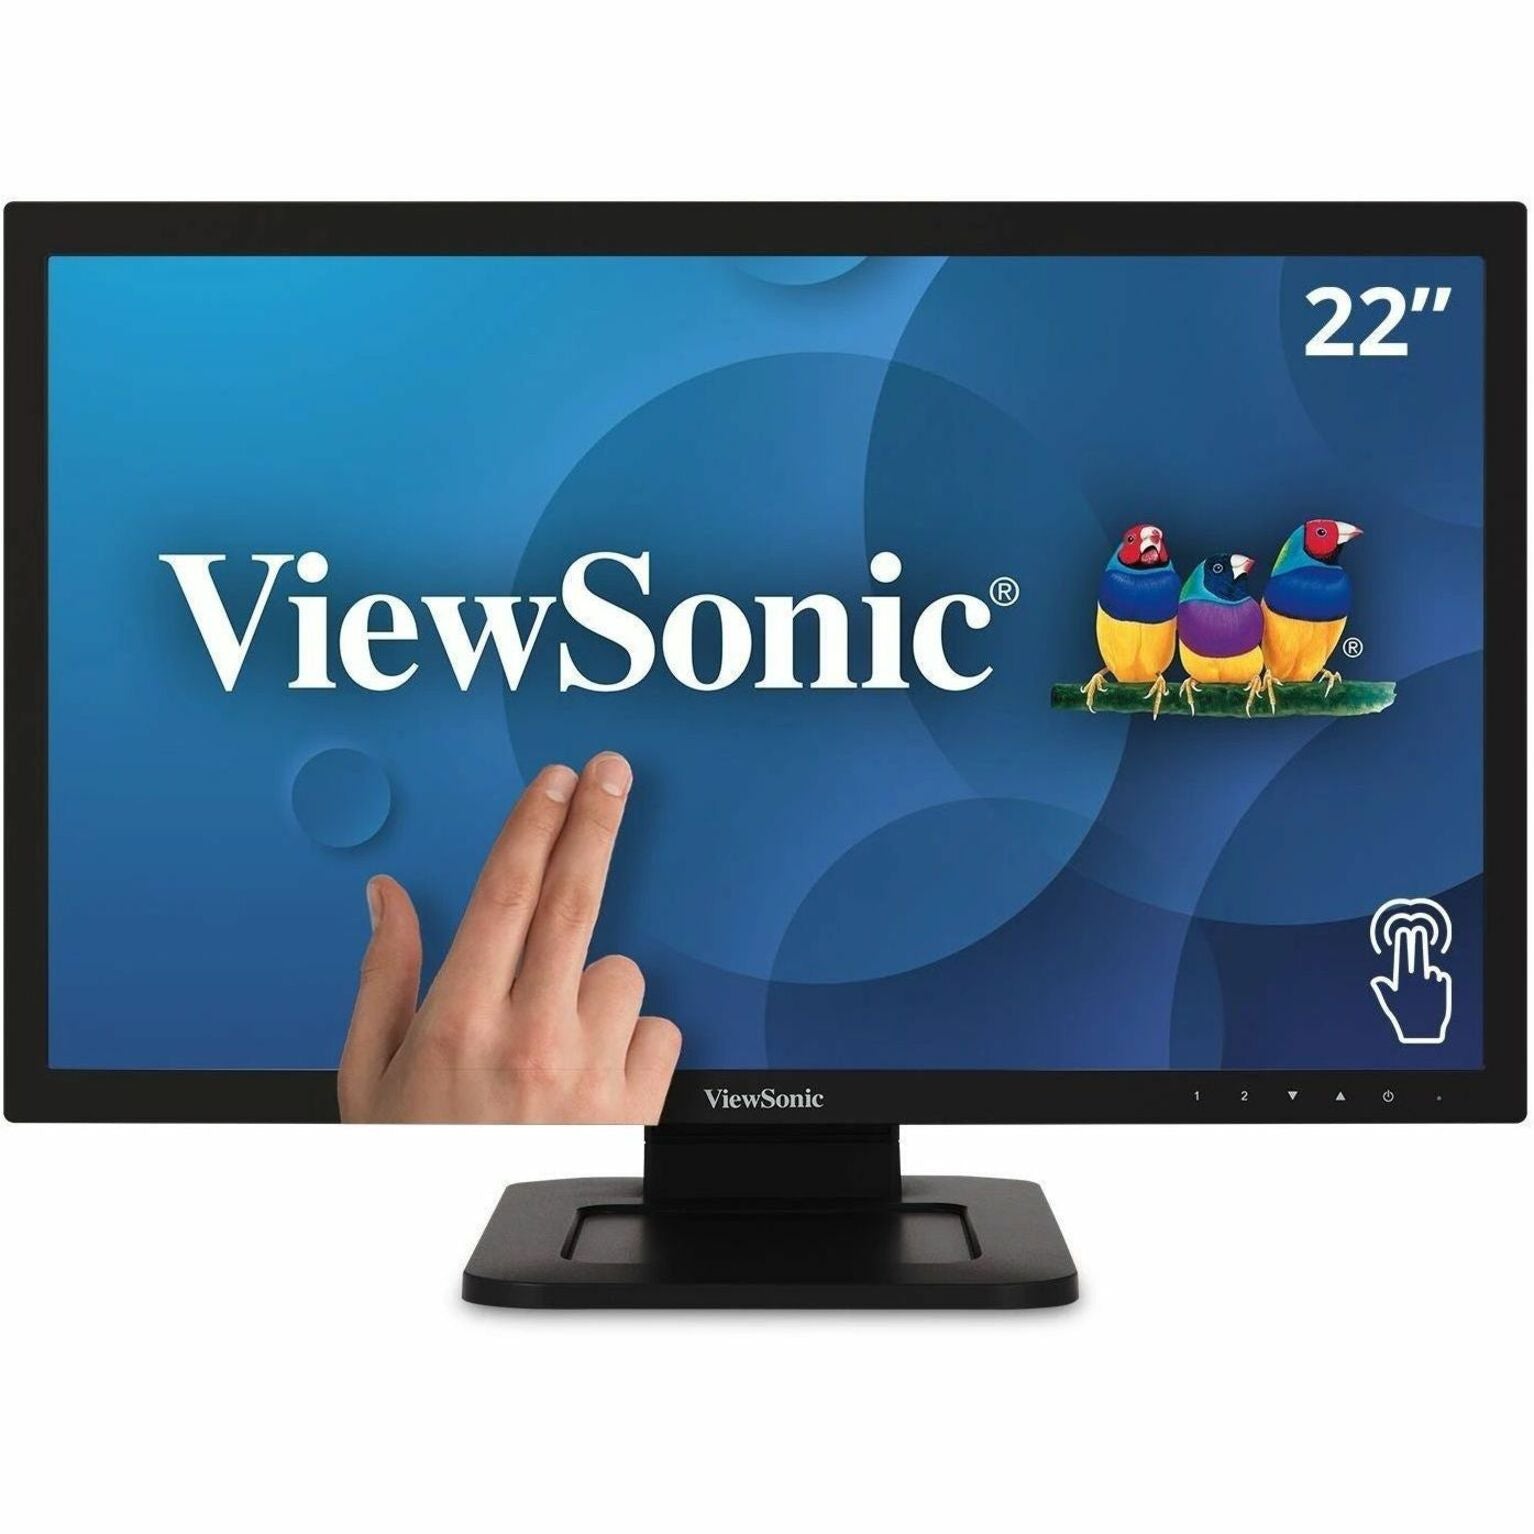 ViewSonic TD2210 22 Full HD Resistive Touch Monitor, LED, 1920 x 1080, Speakers, DVI, VGA, Energy Star